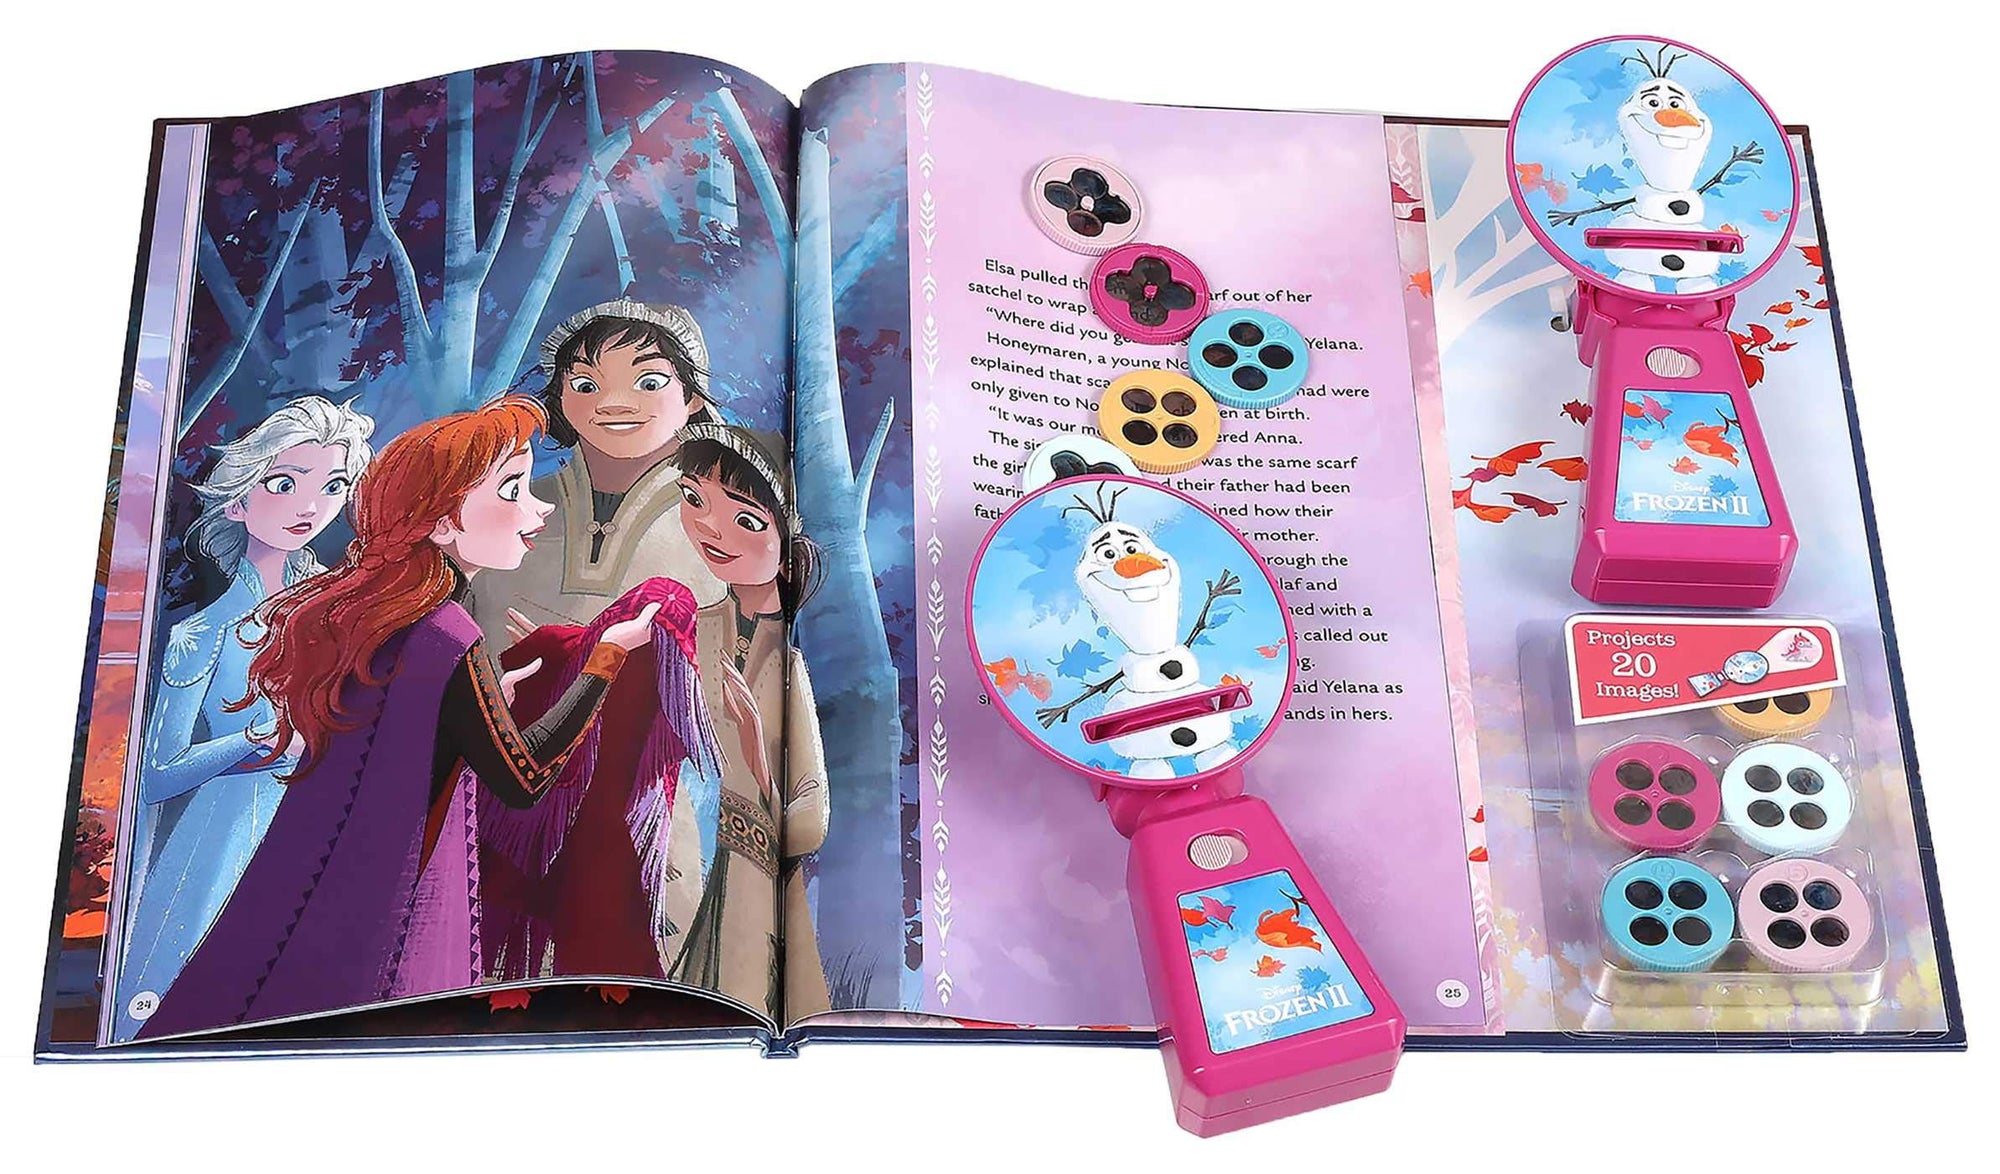 Movie Theater Storybook & Movie Projector: Disney Frozen